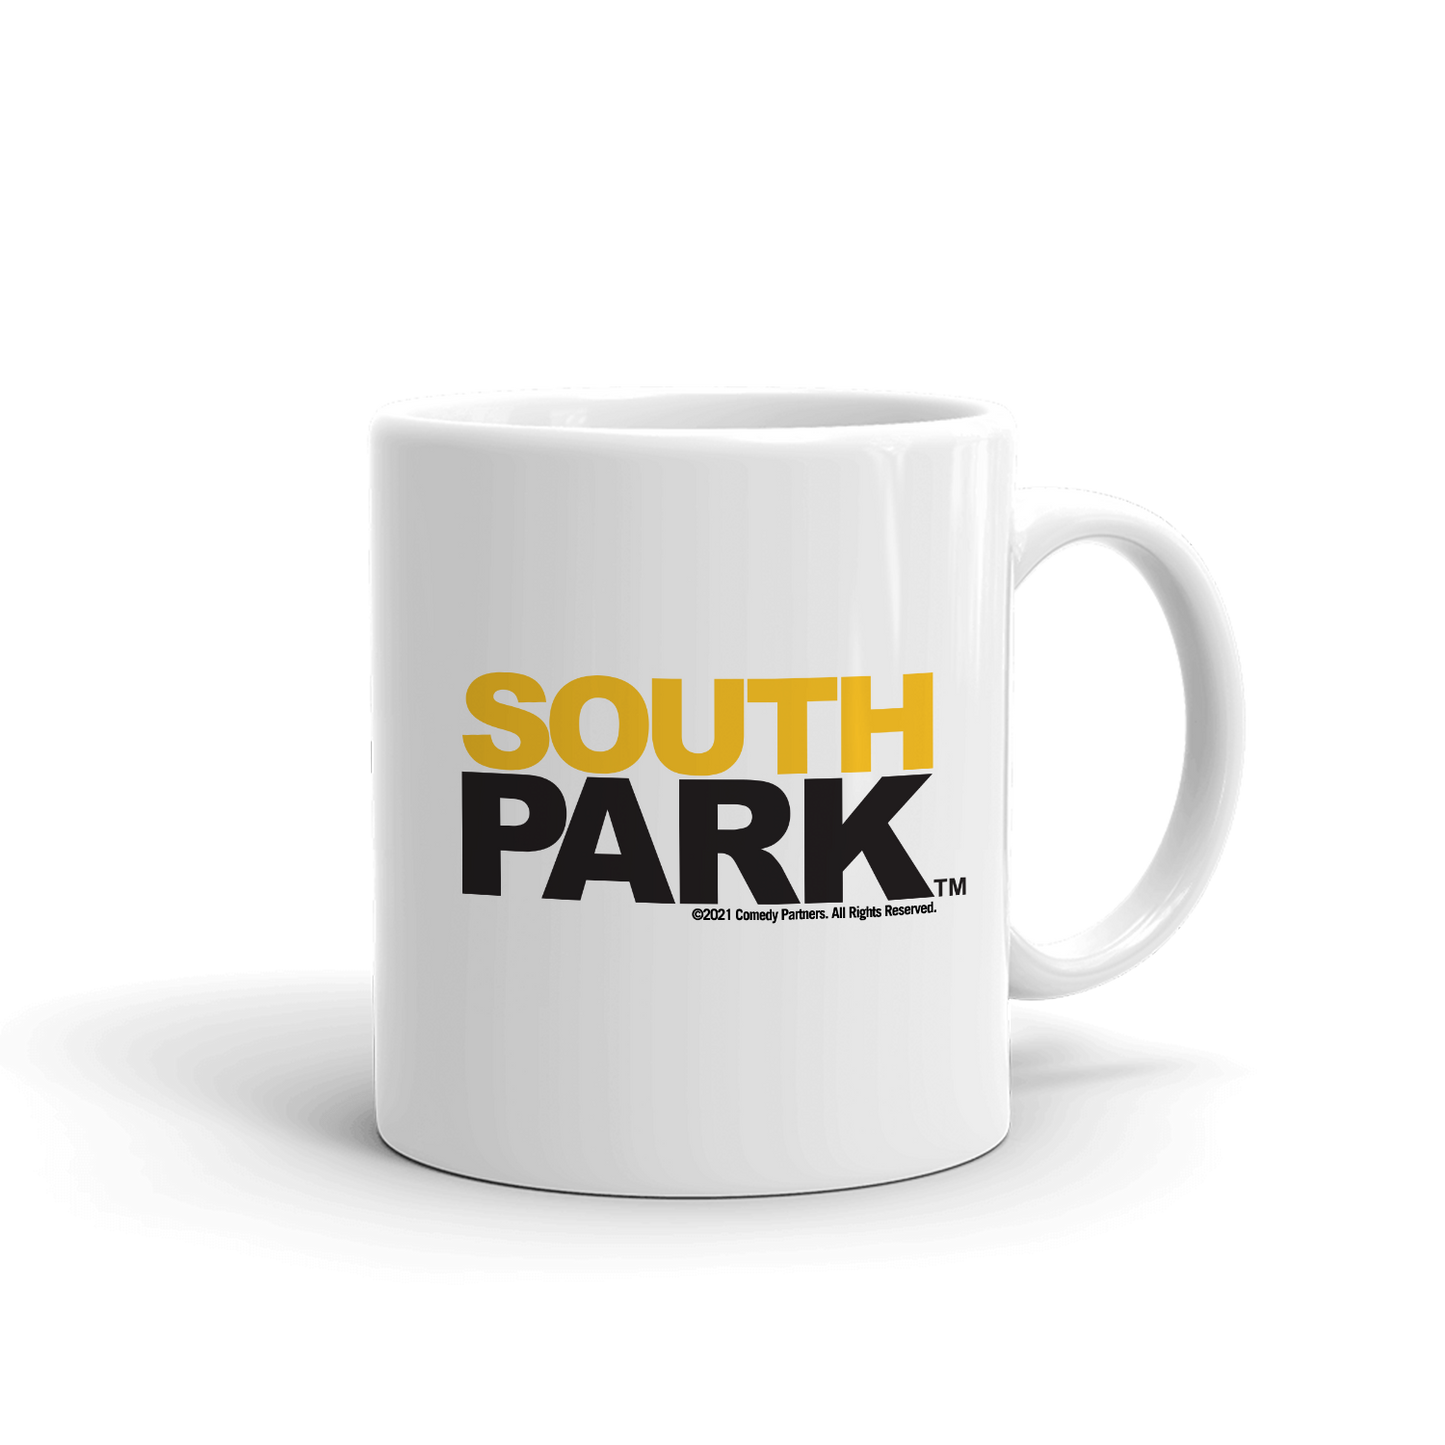 South Park It's the Future White Mug